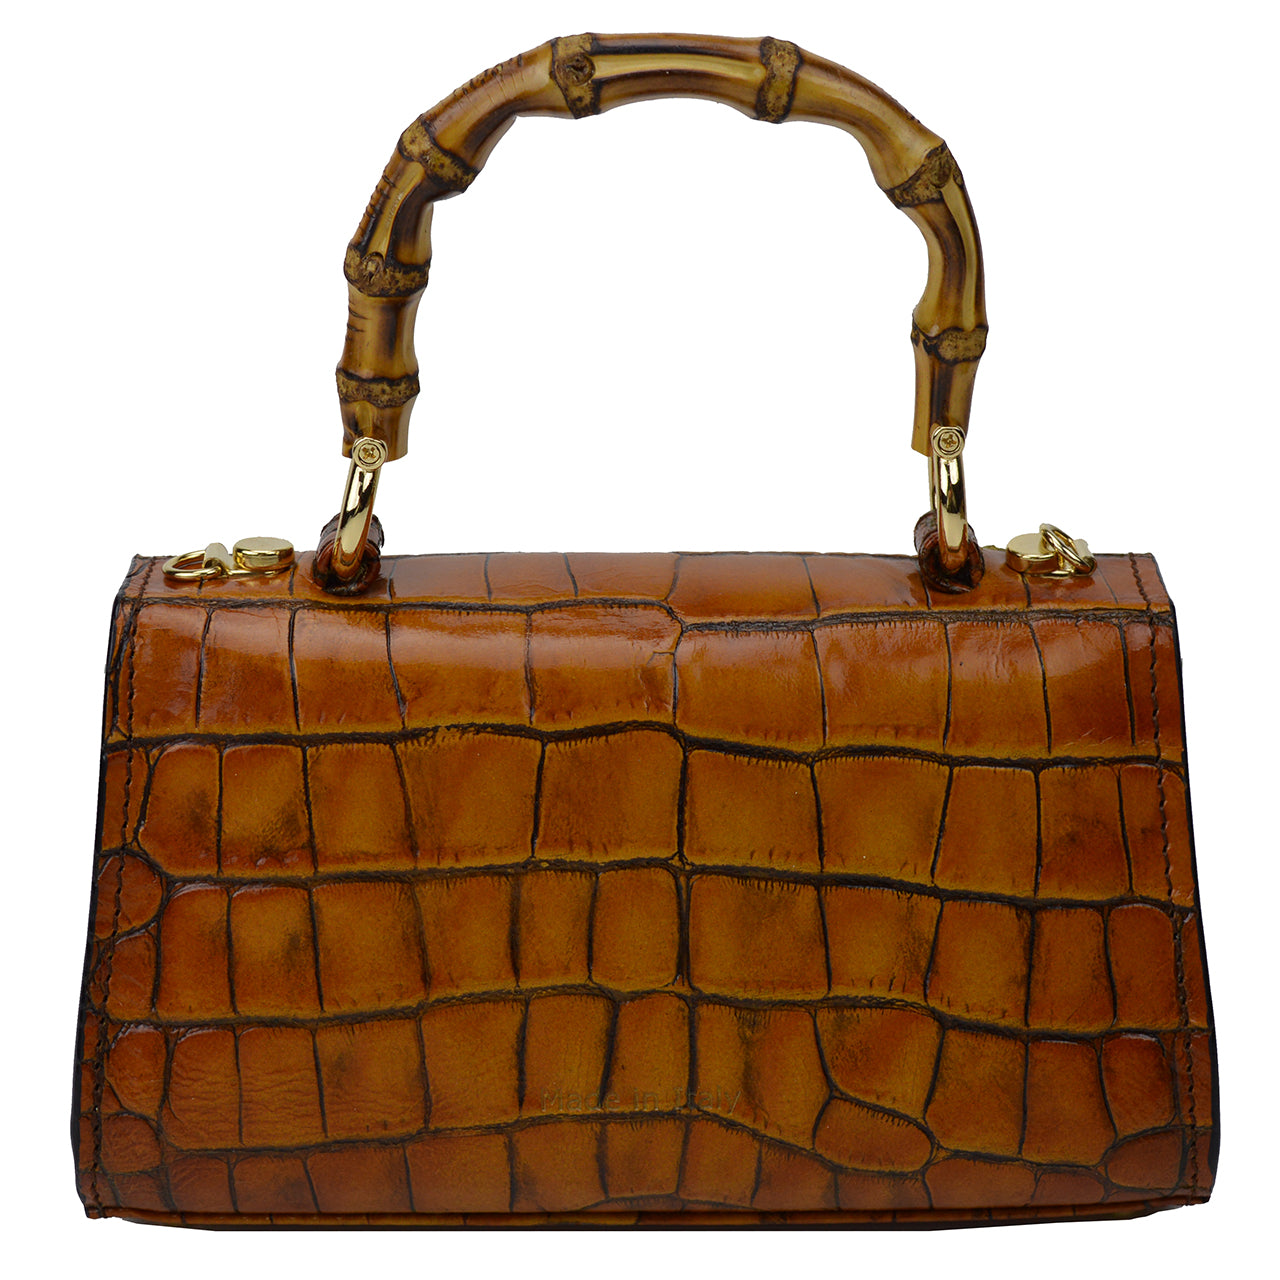 Pratesi Castalia Lady Bag in genuine Italian leather - Croco Embossed Leather Cognac